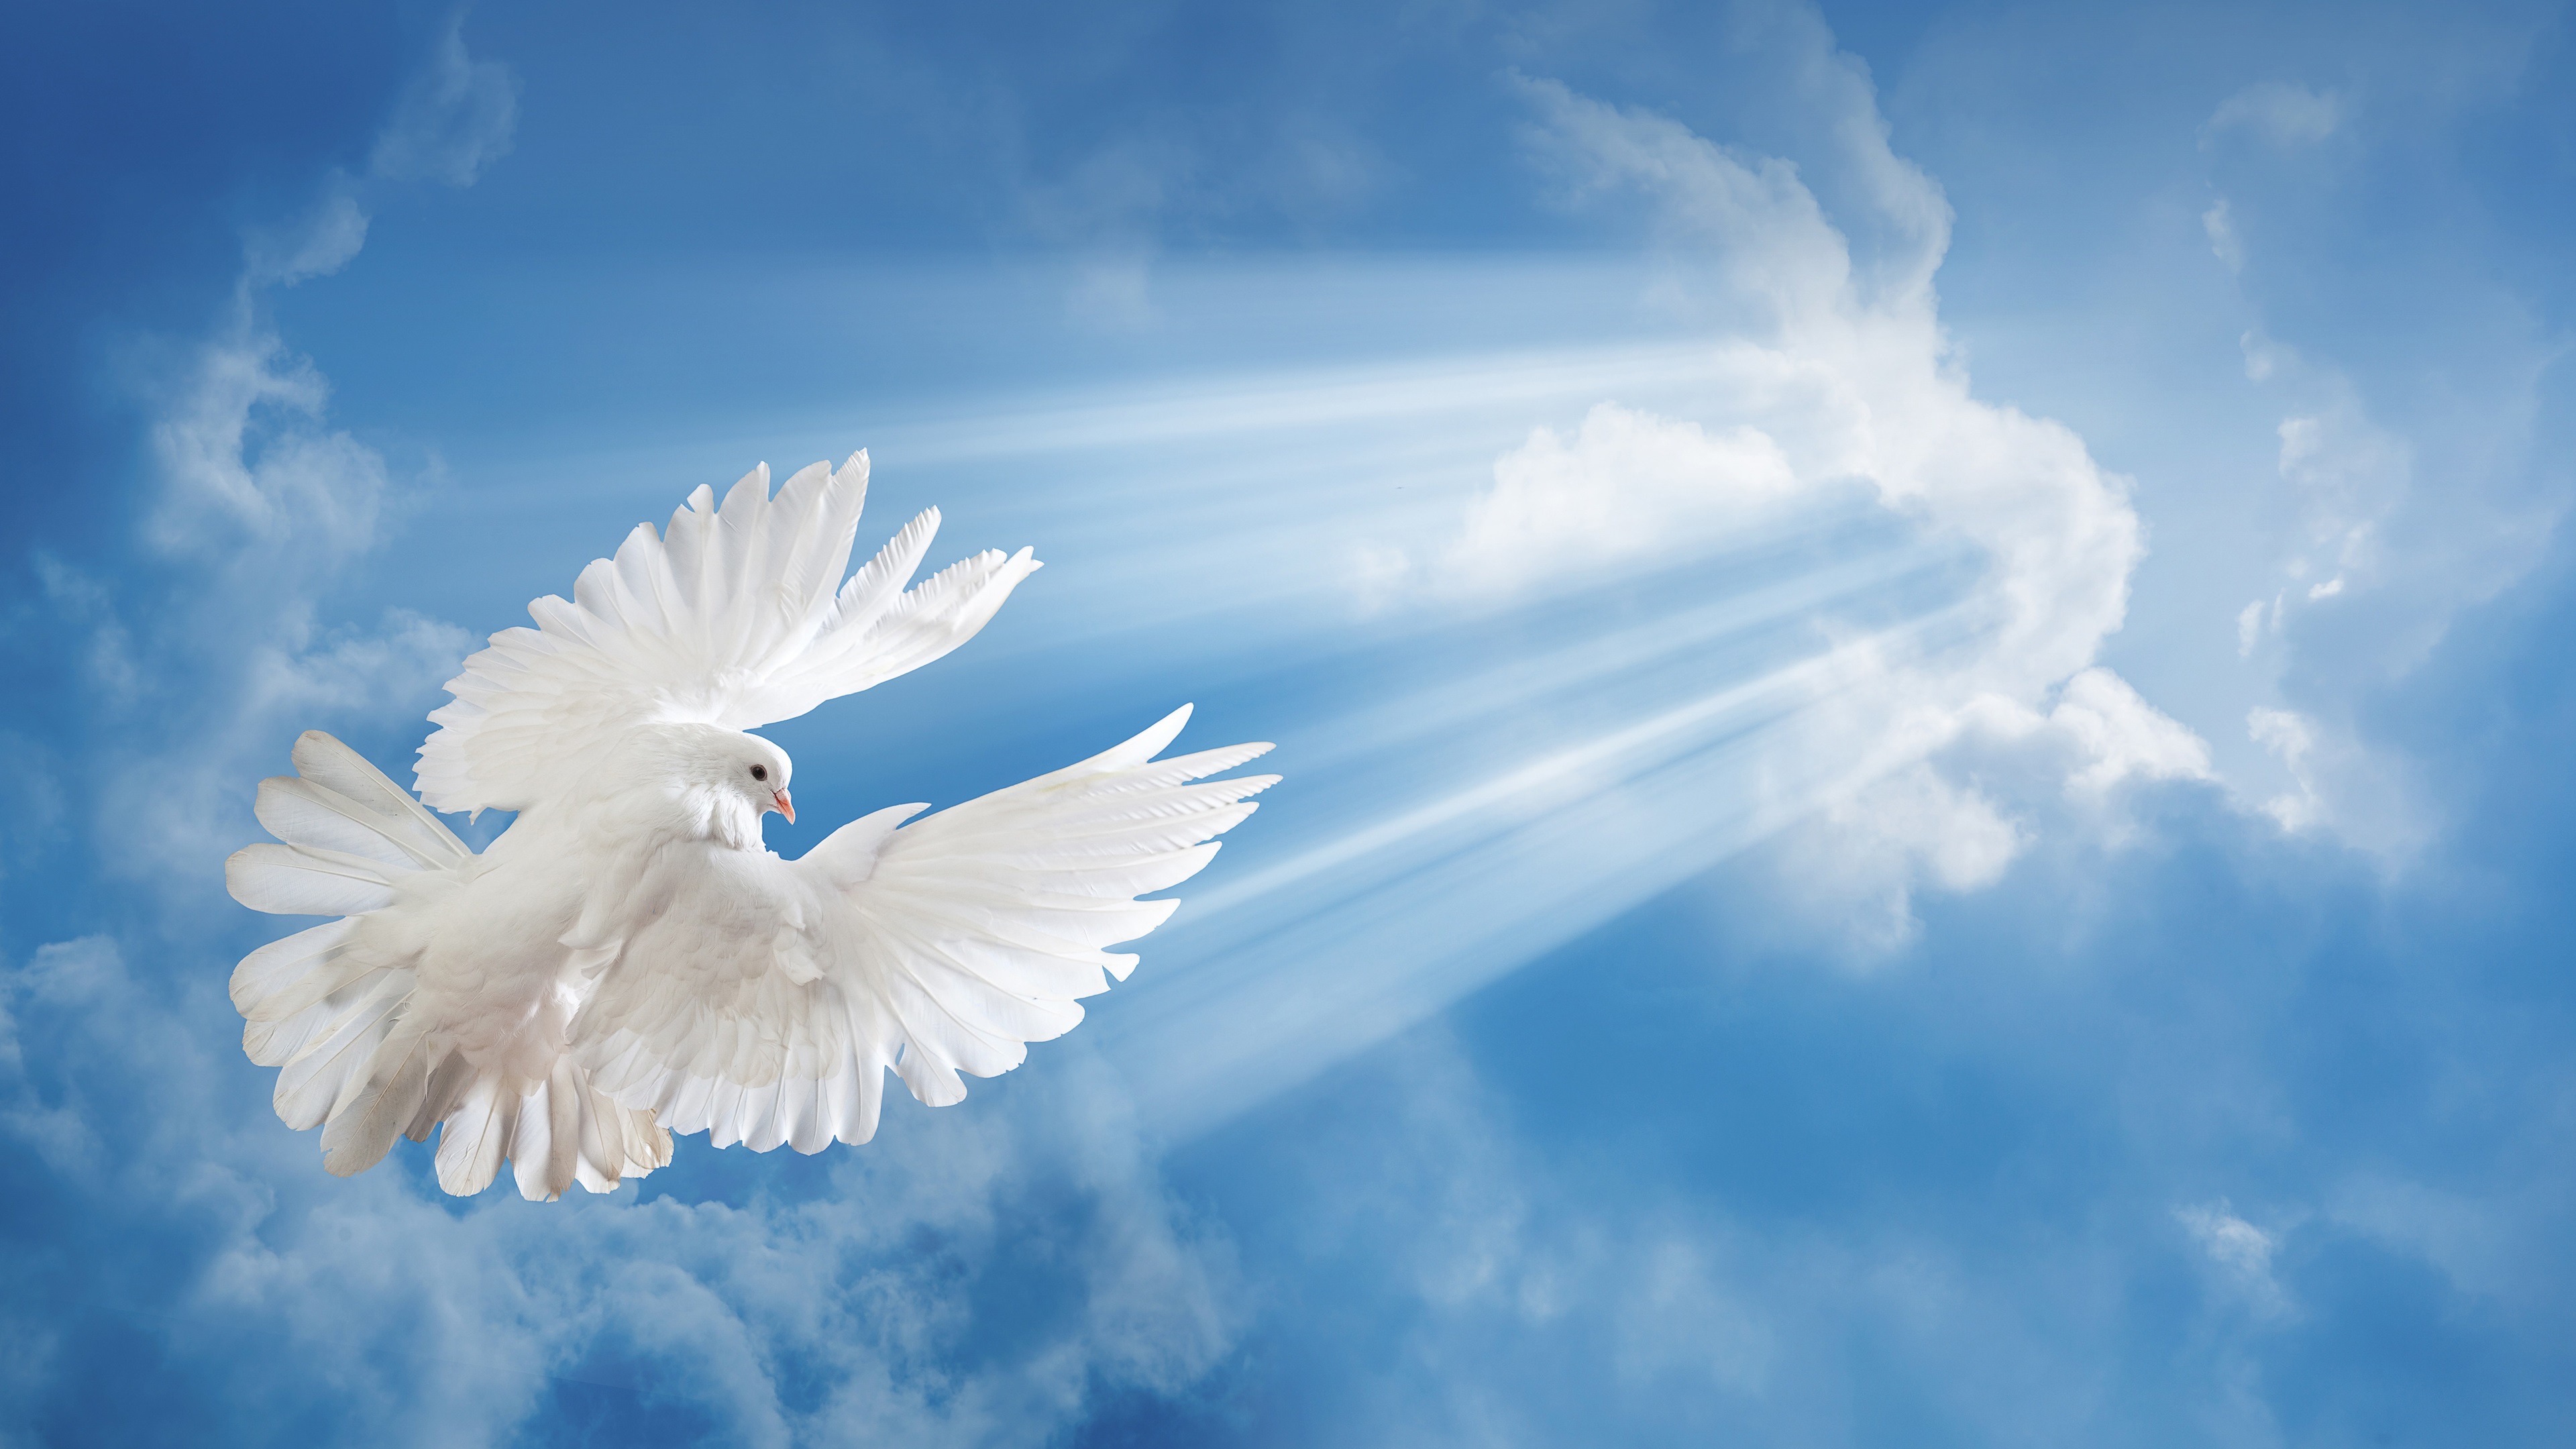 Wallpaper White dove, blue sky, clouds 3840x2160 UHD 4K Picture, Image